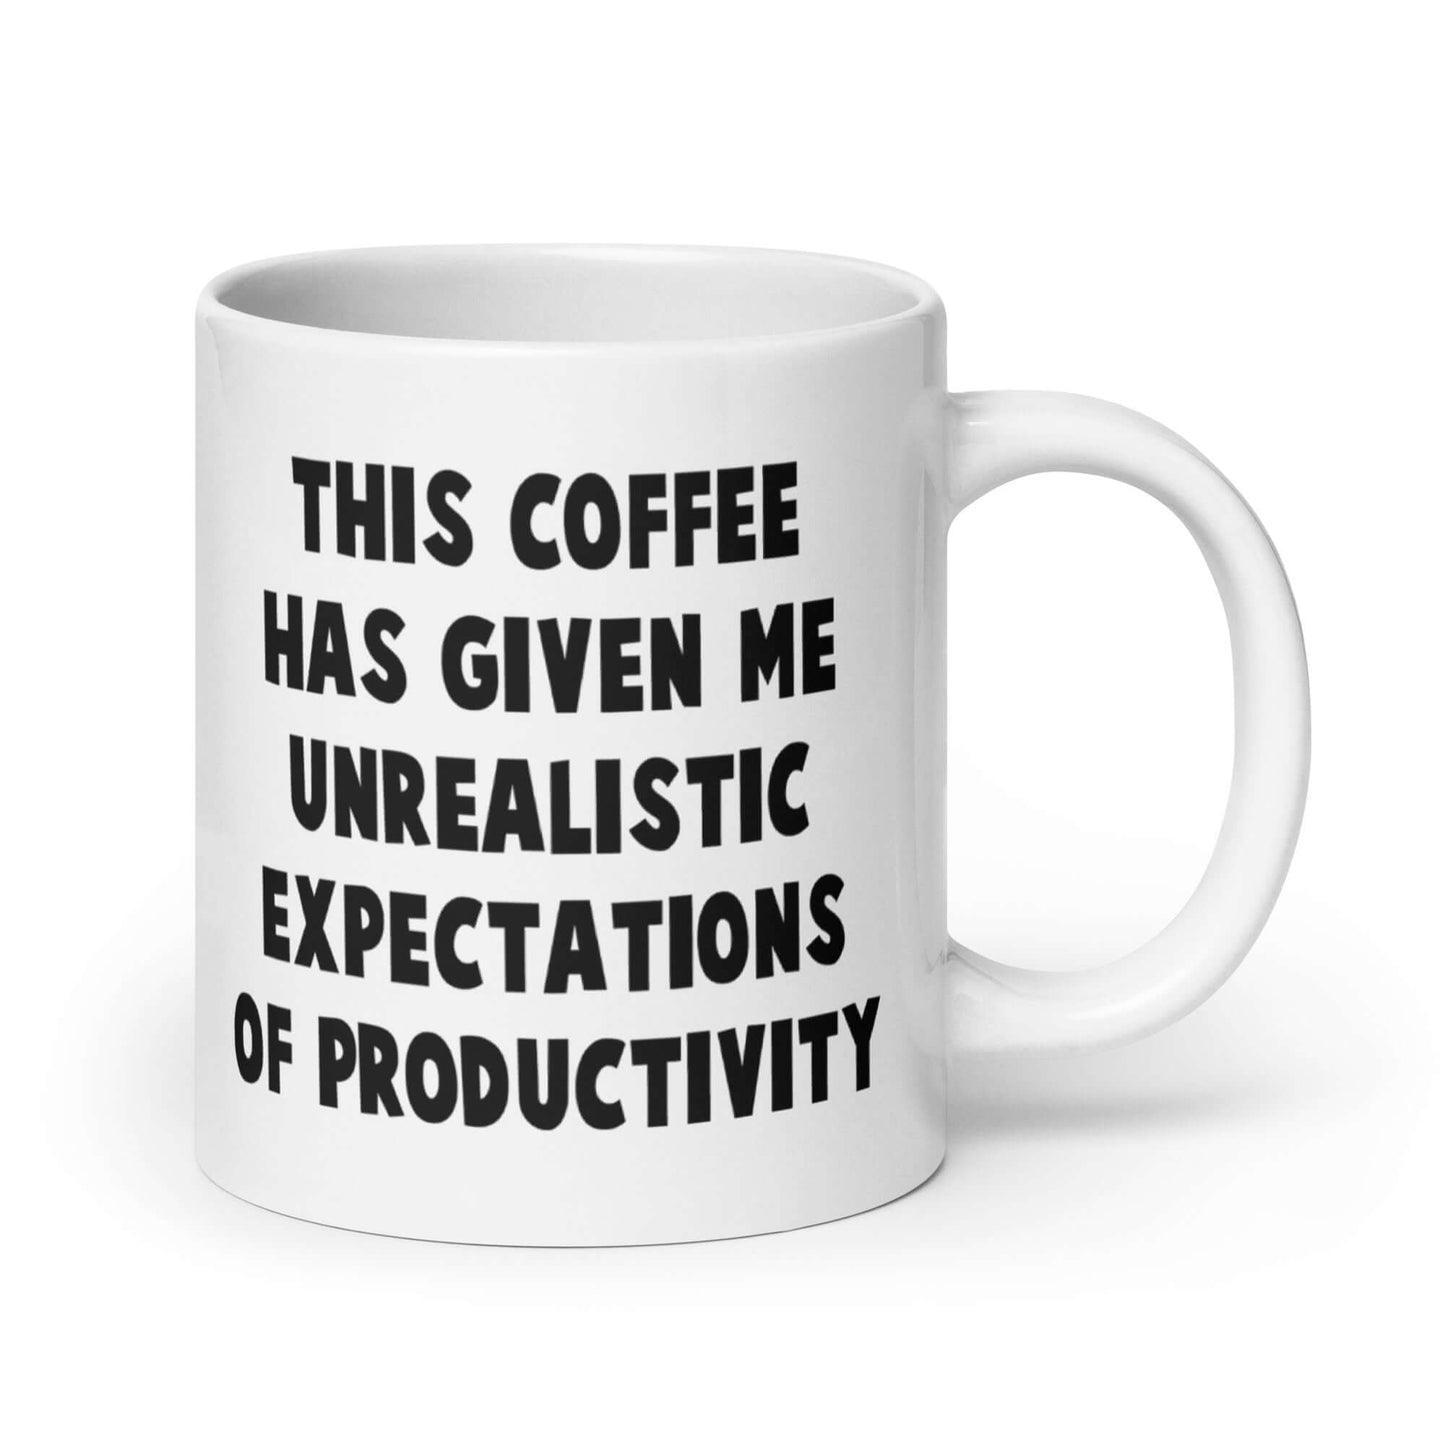 Unrealistic expectations of productivity ceramic mug